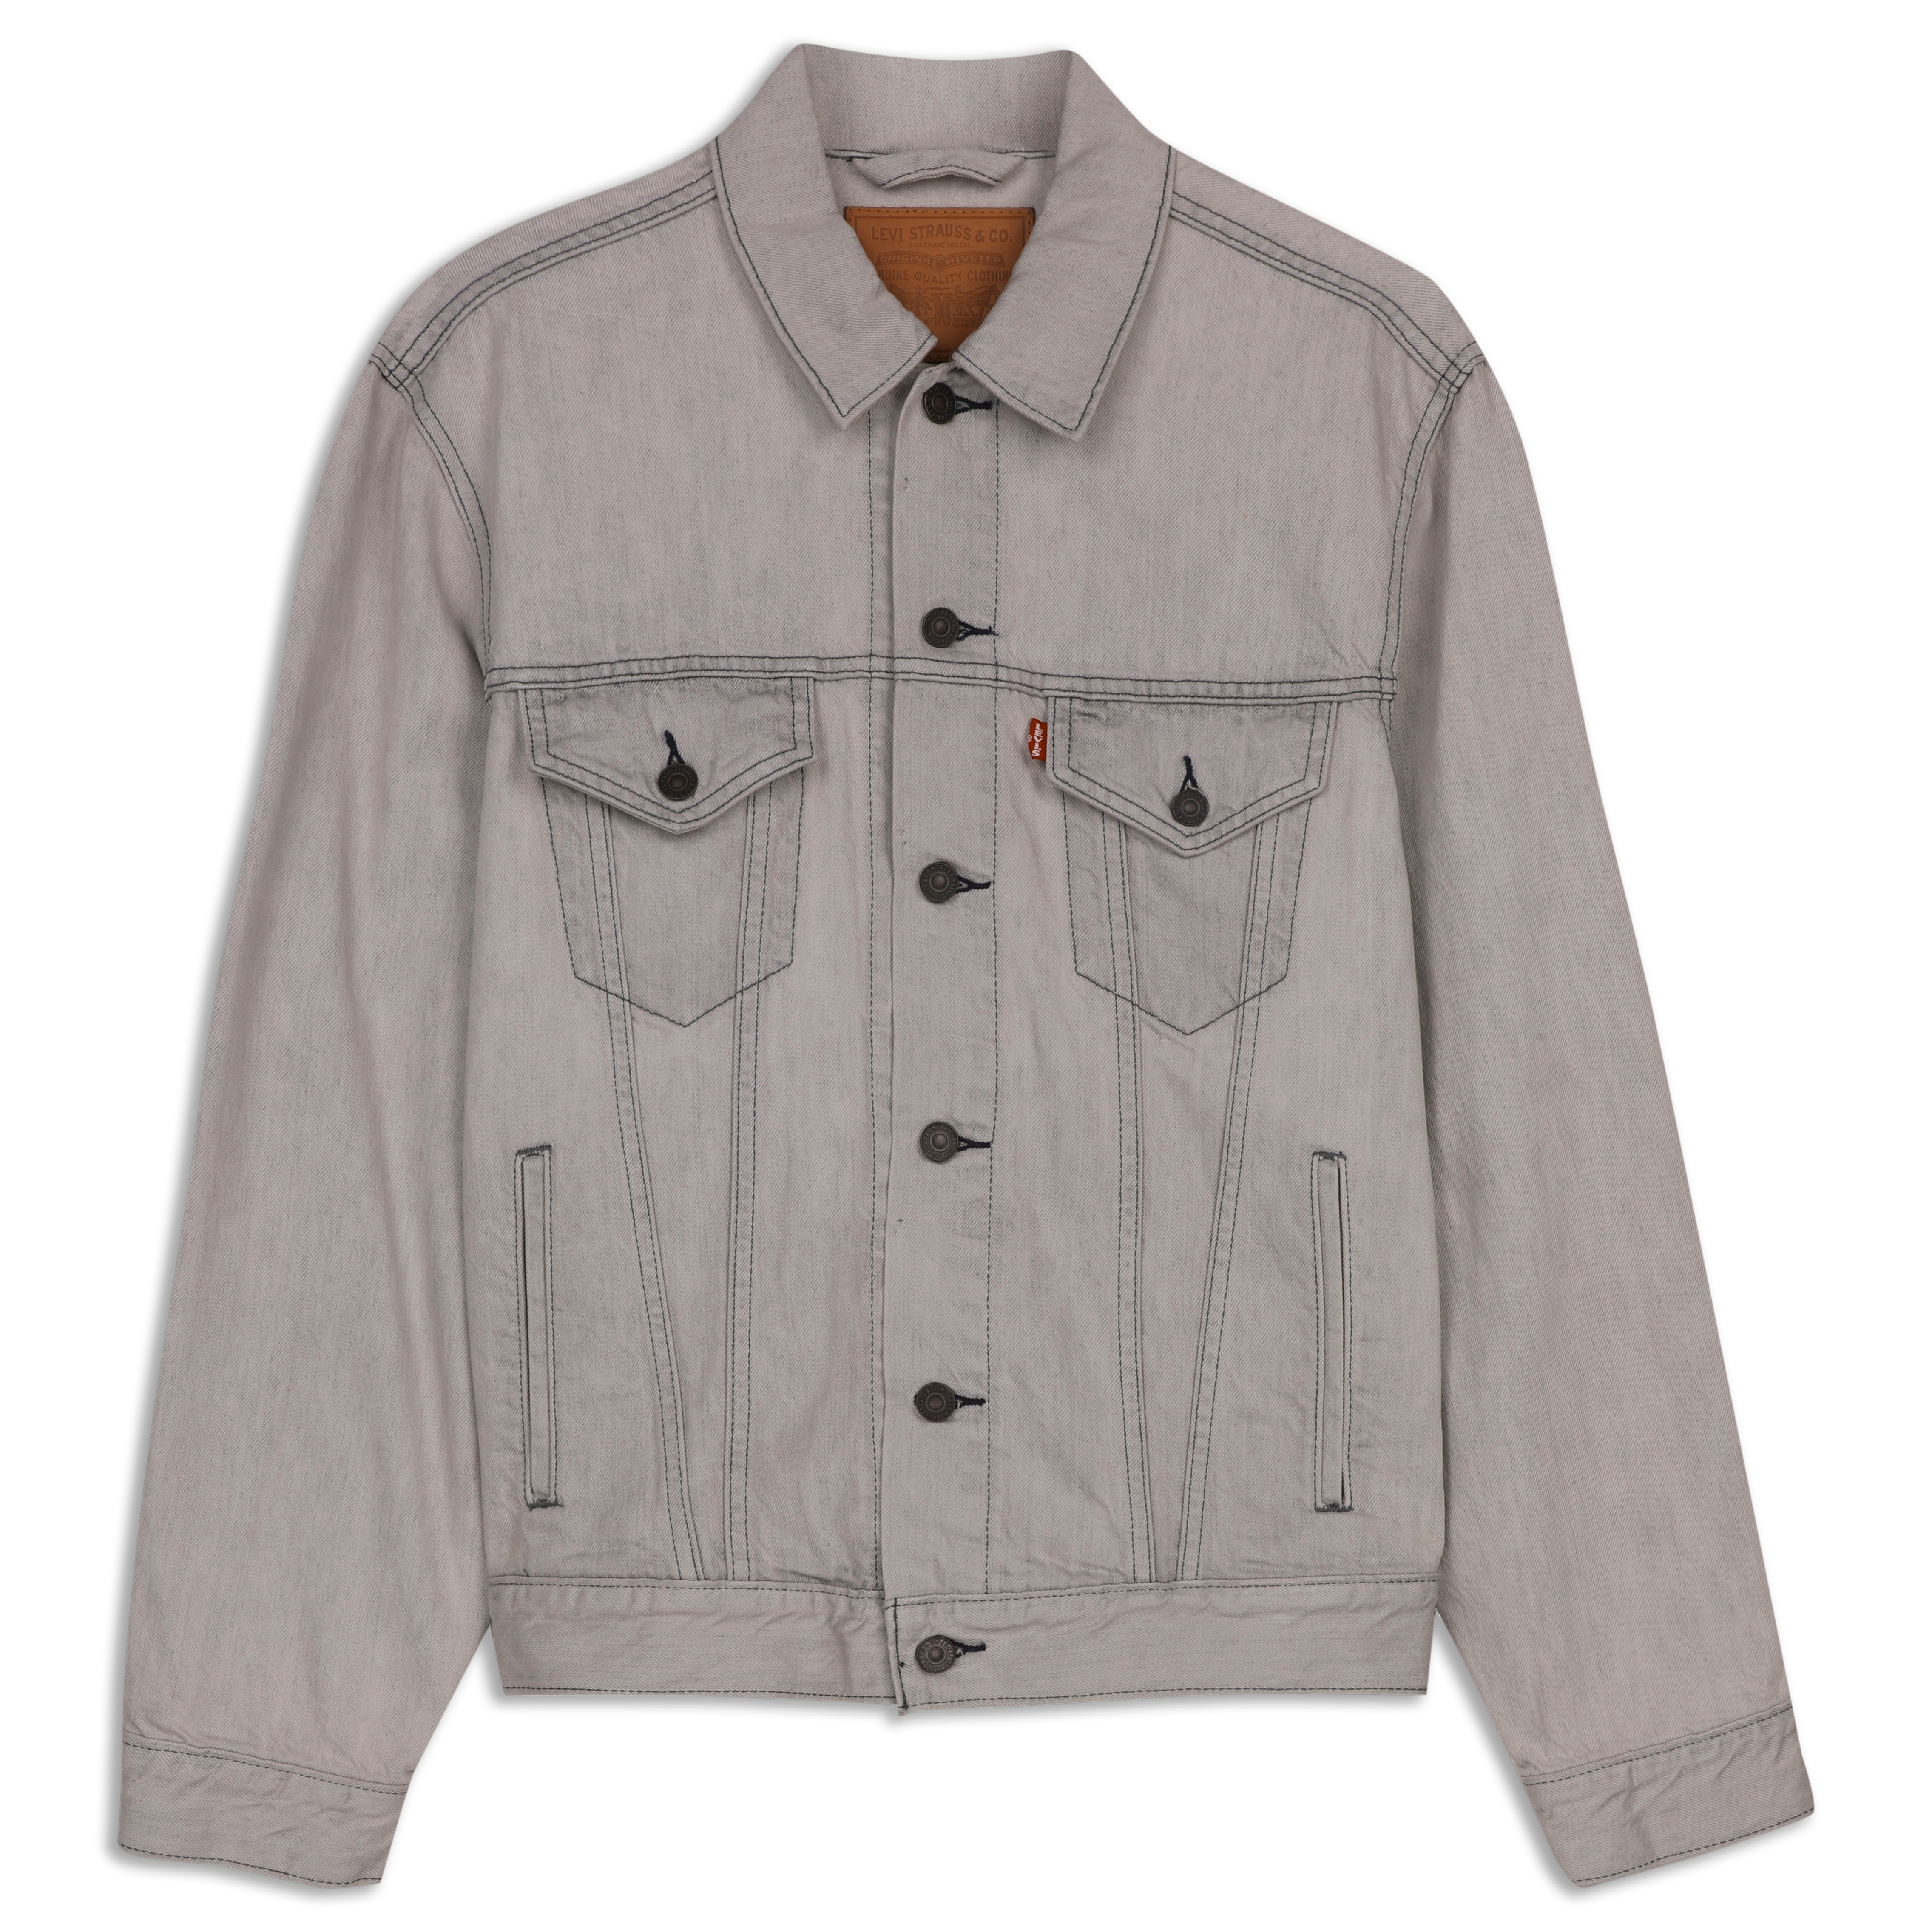 Levi's Vintage Clothing's Halloween 501 Jeans & Jacket